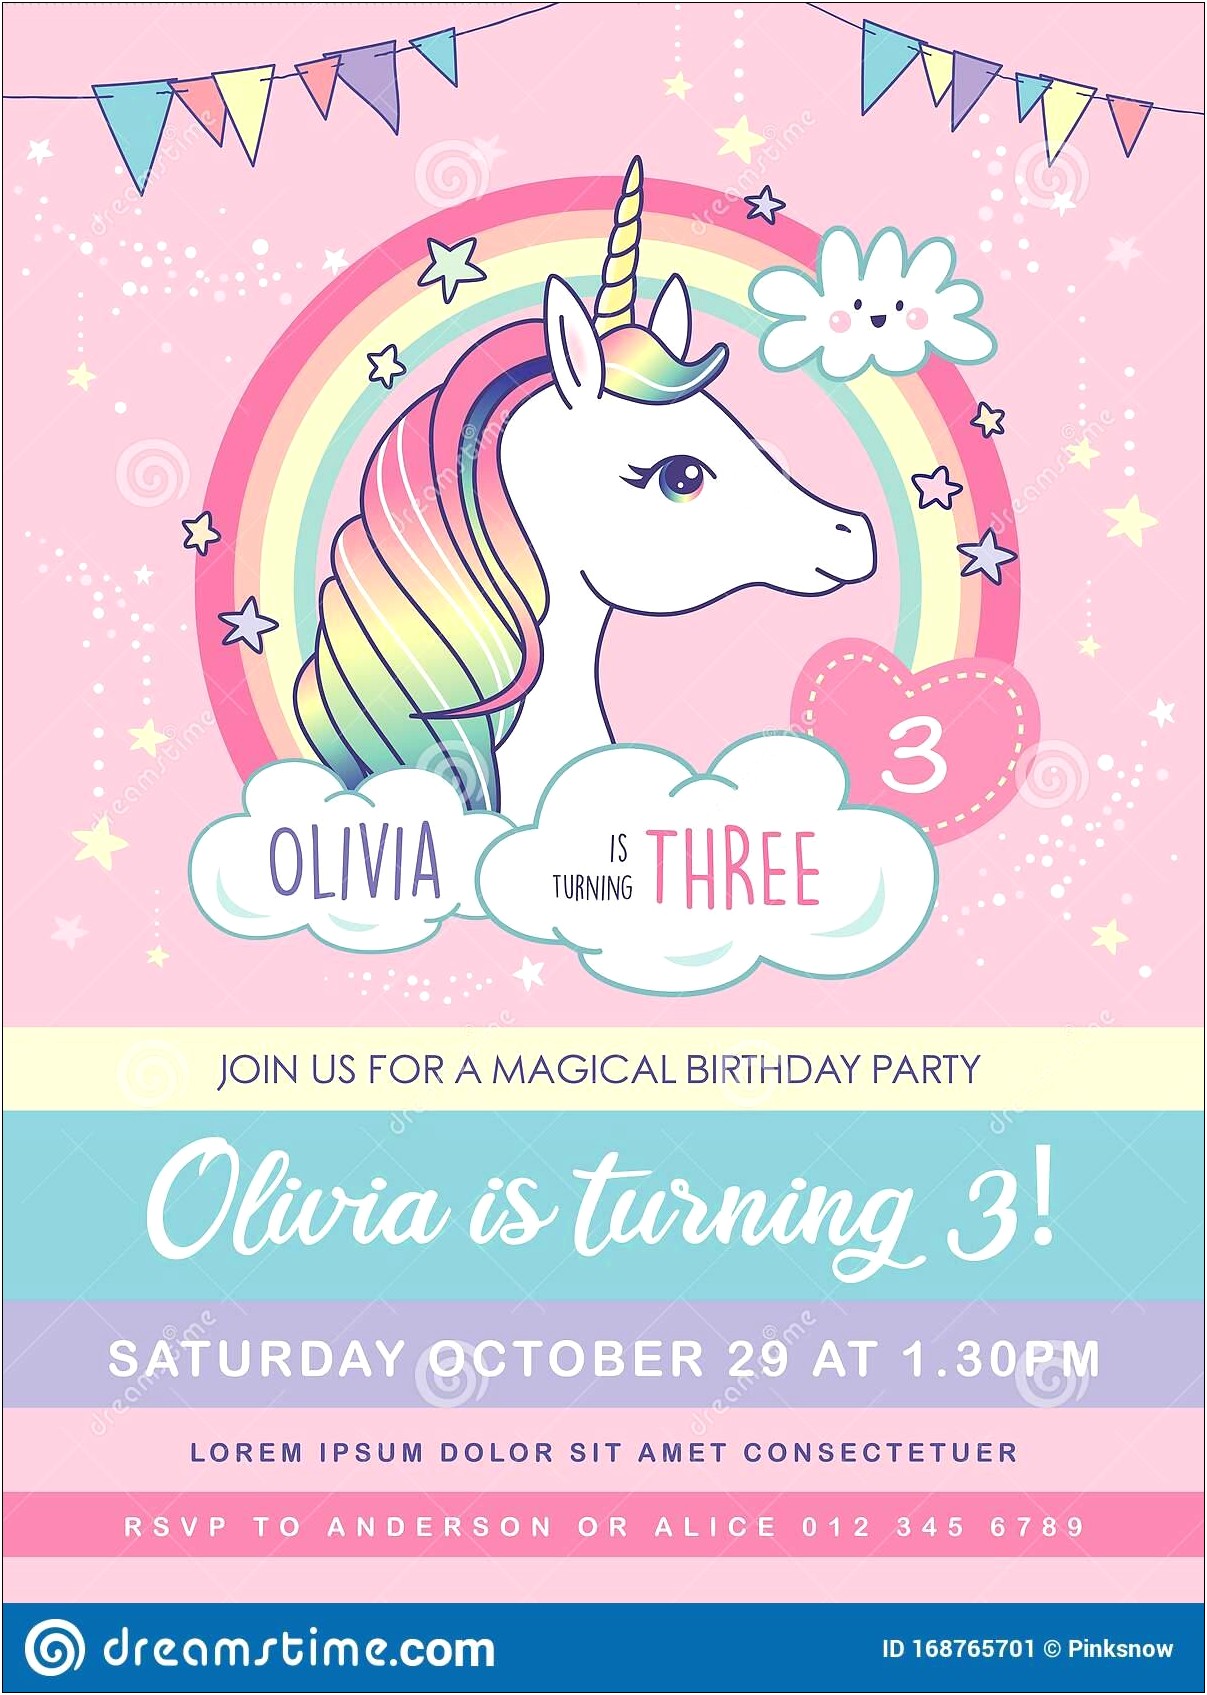 Free Birthday Party Invitation Card Templates